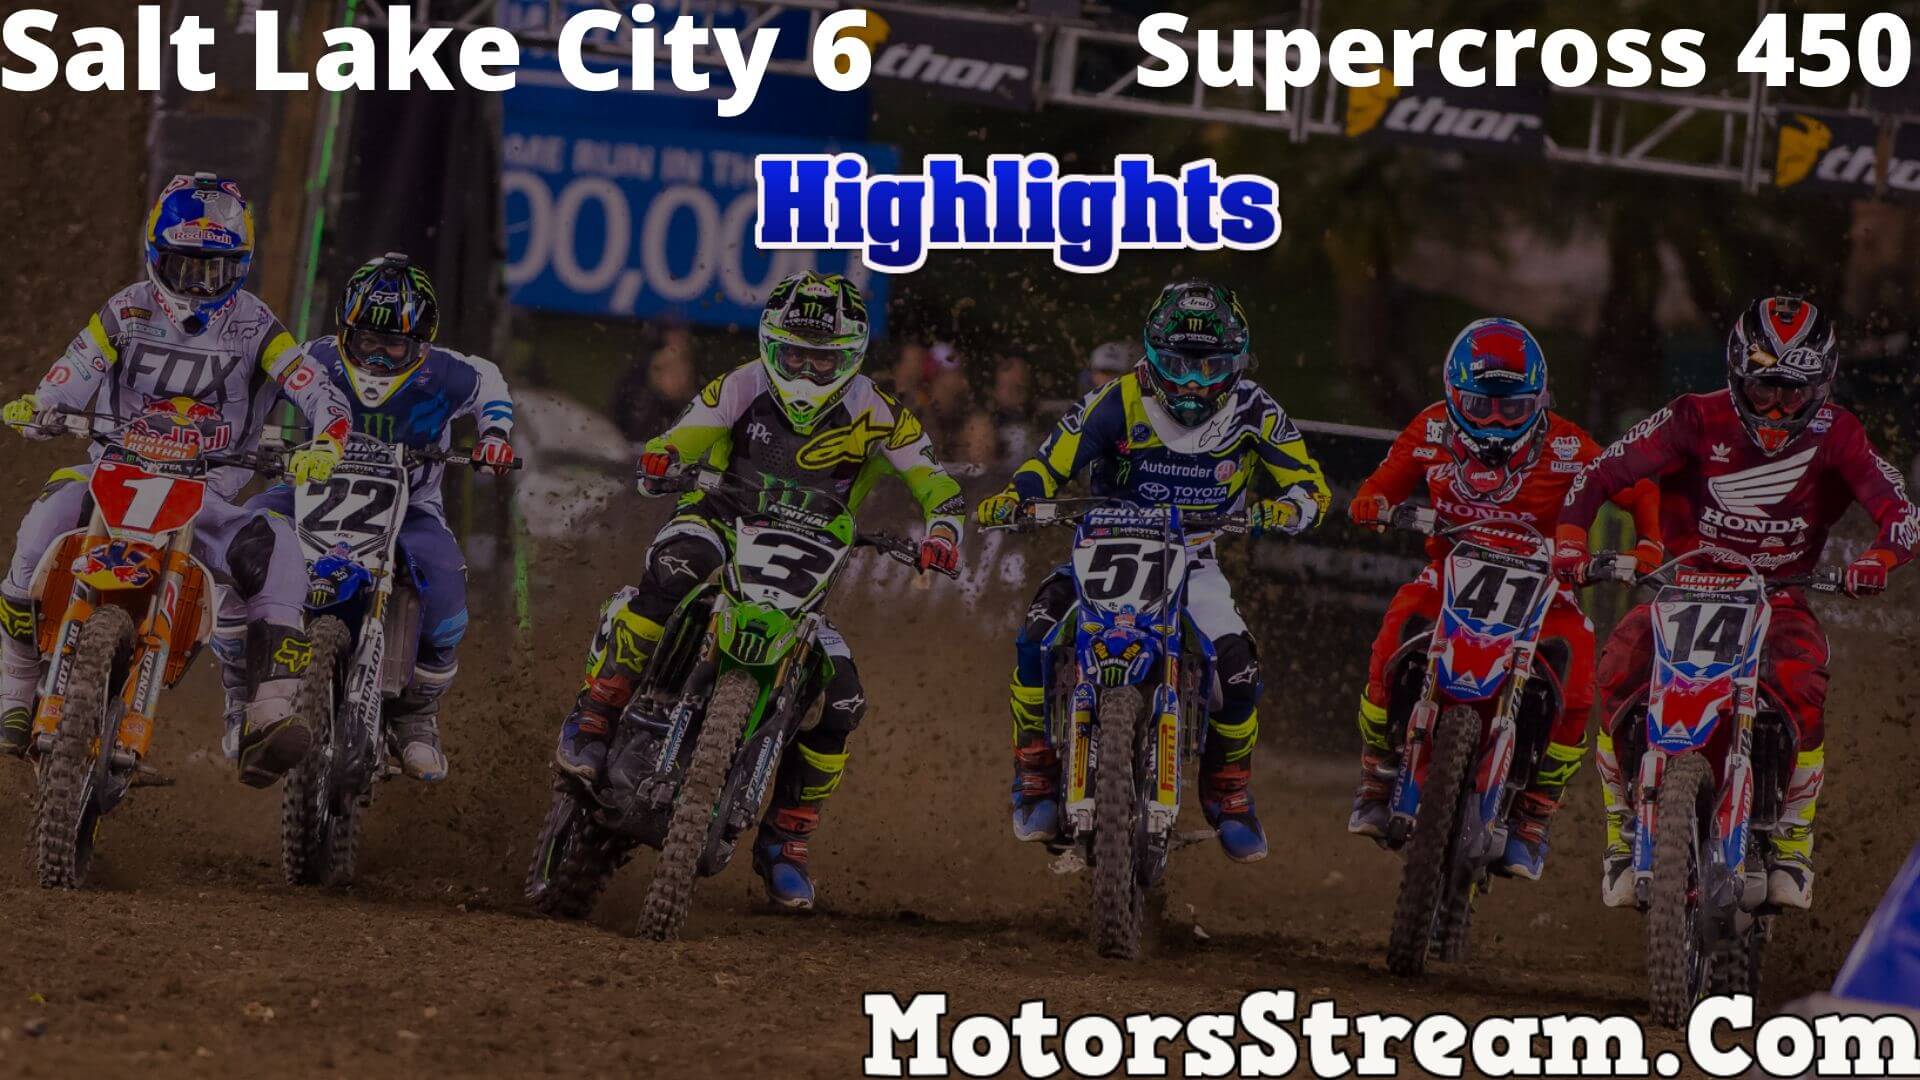 Super Lake City 6 Highlights 2020 Supercross 450